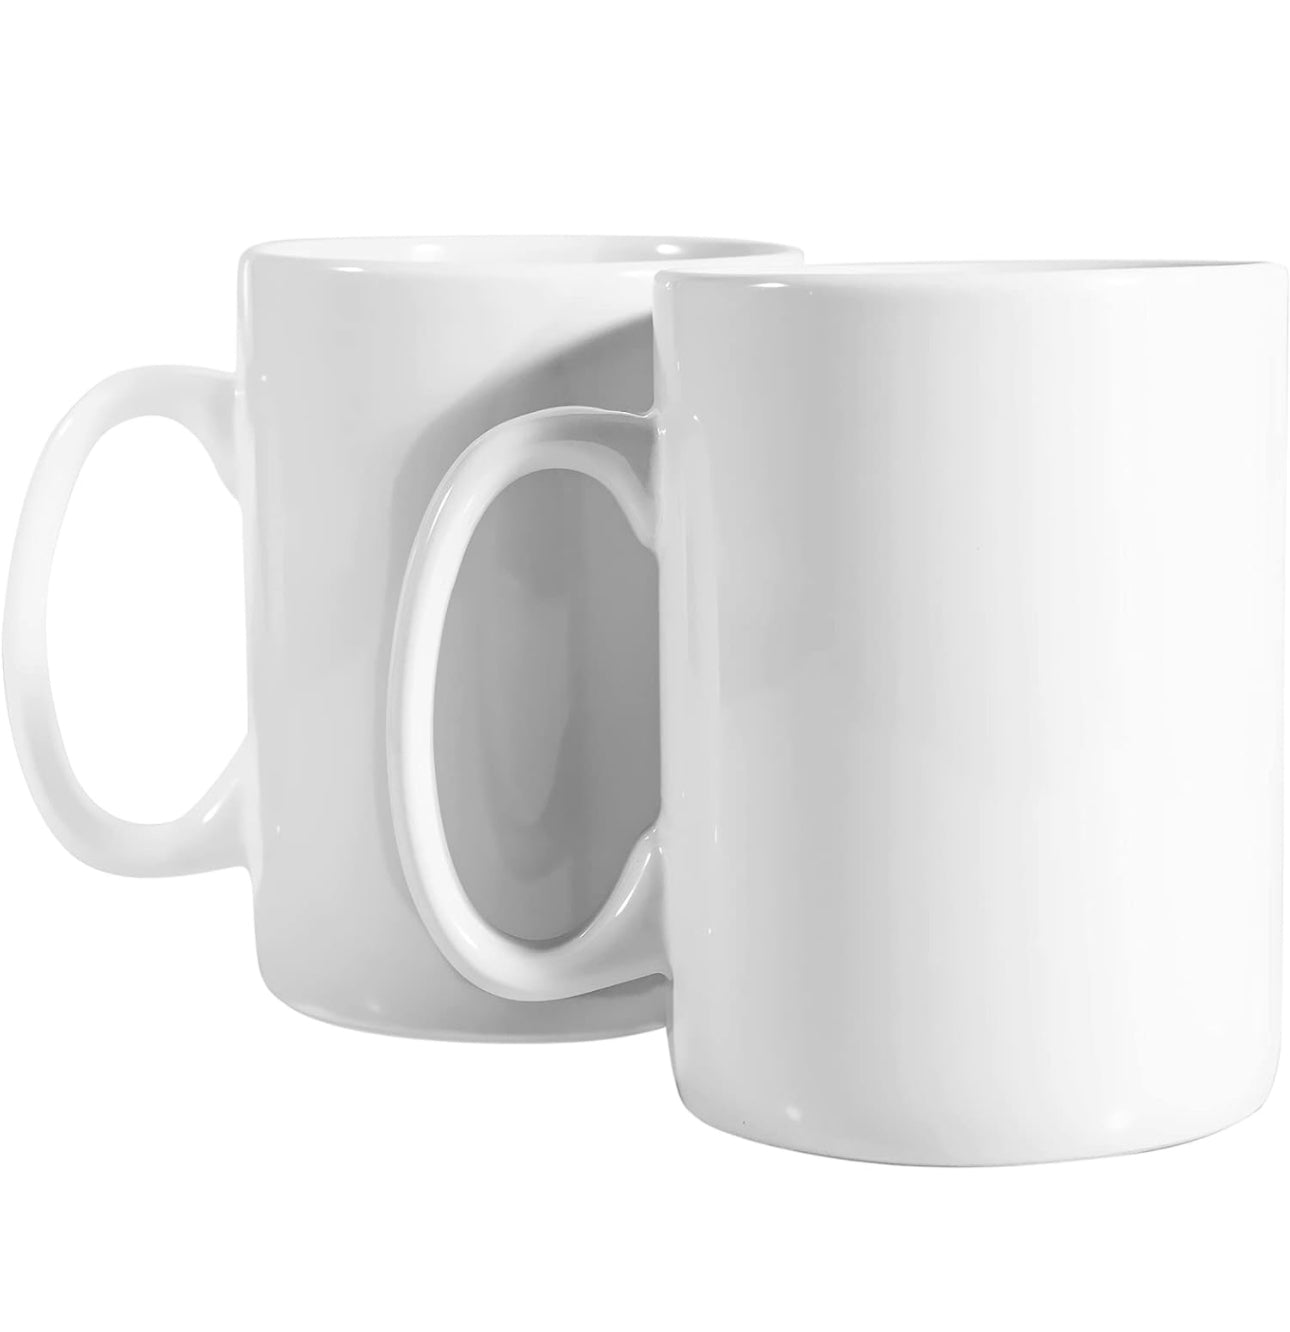 30oz Super Large Ceramic Coffee Mugs Large Handles Set of 2 (White)